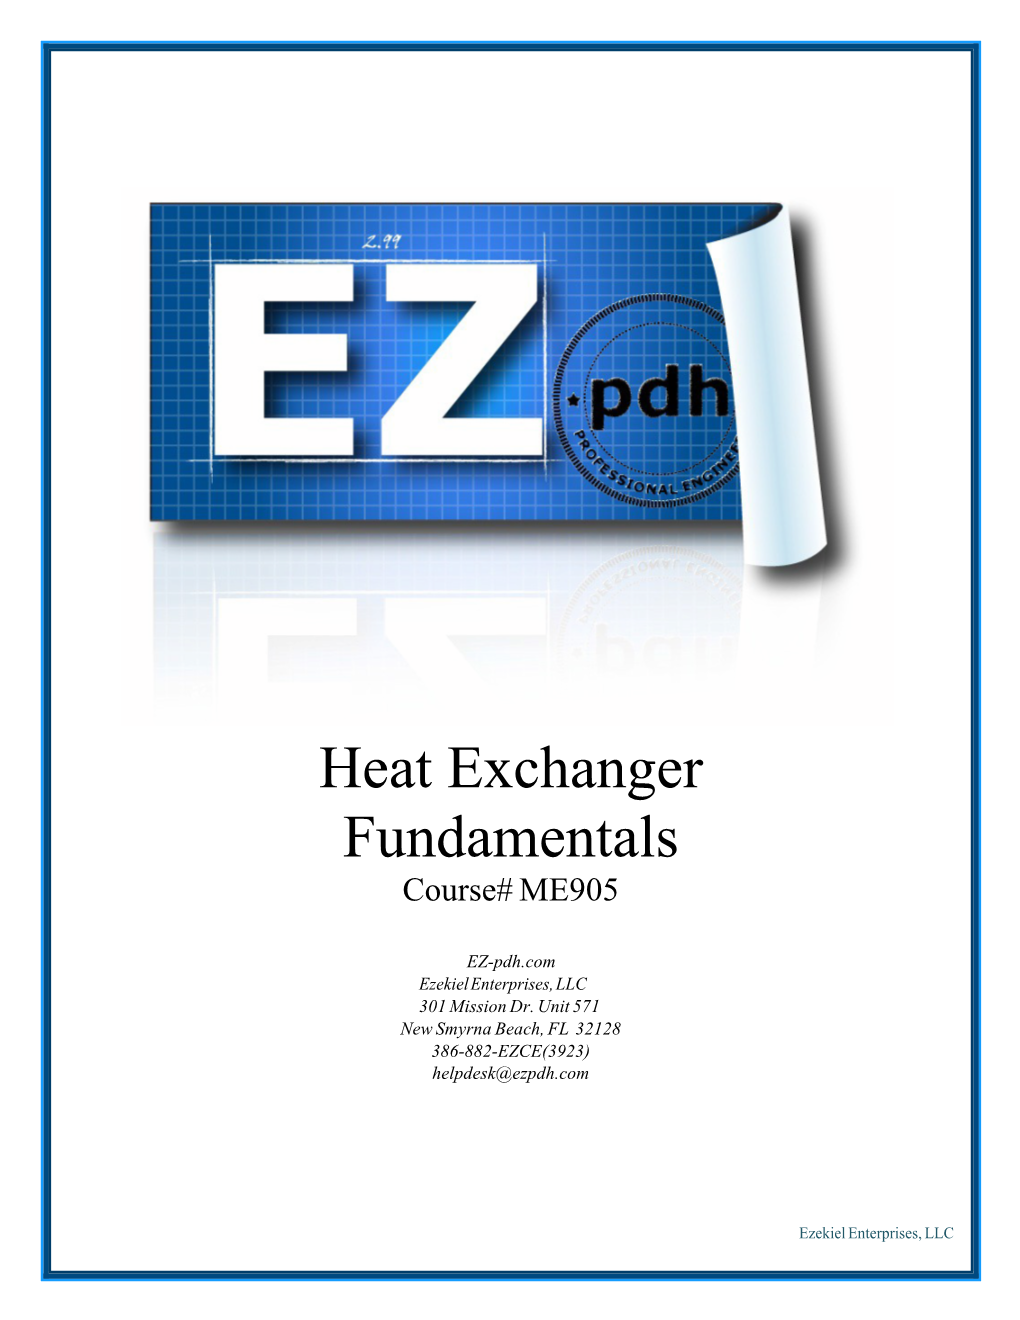 Heat Exchanger Fundamentals Course# ME905